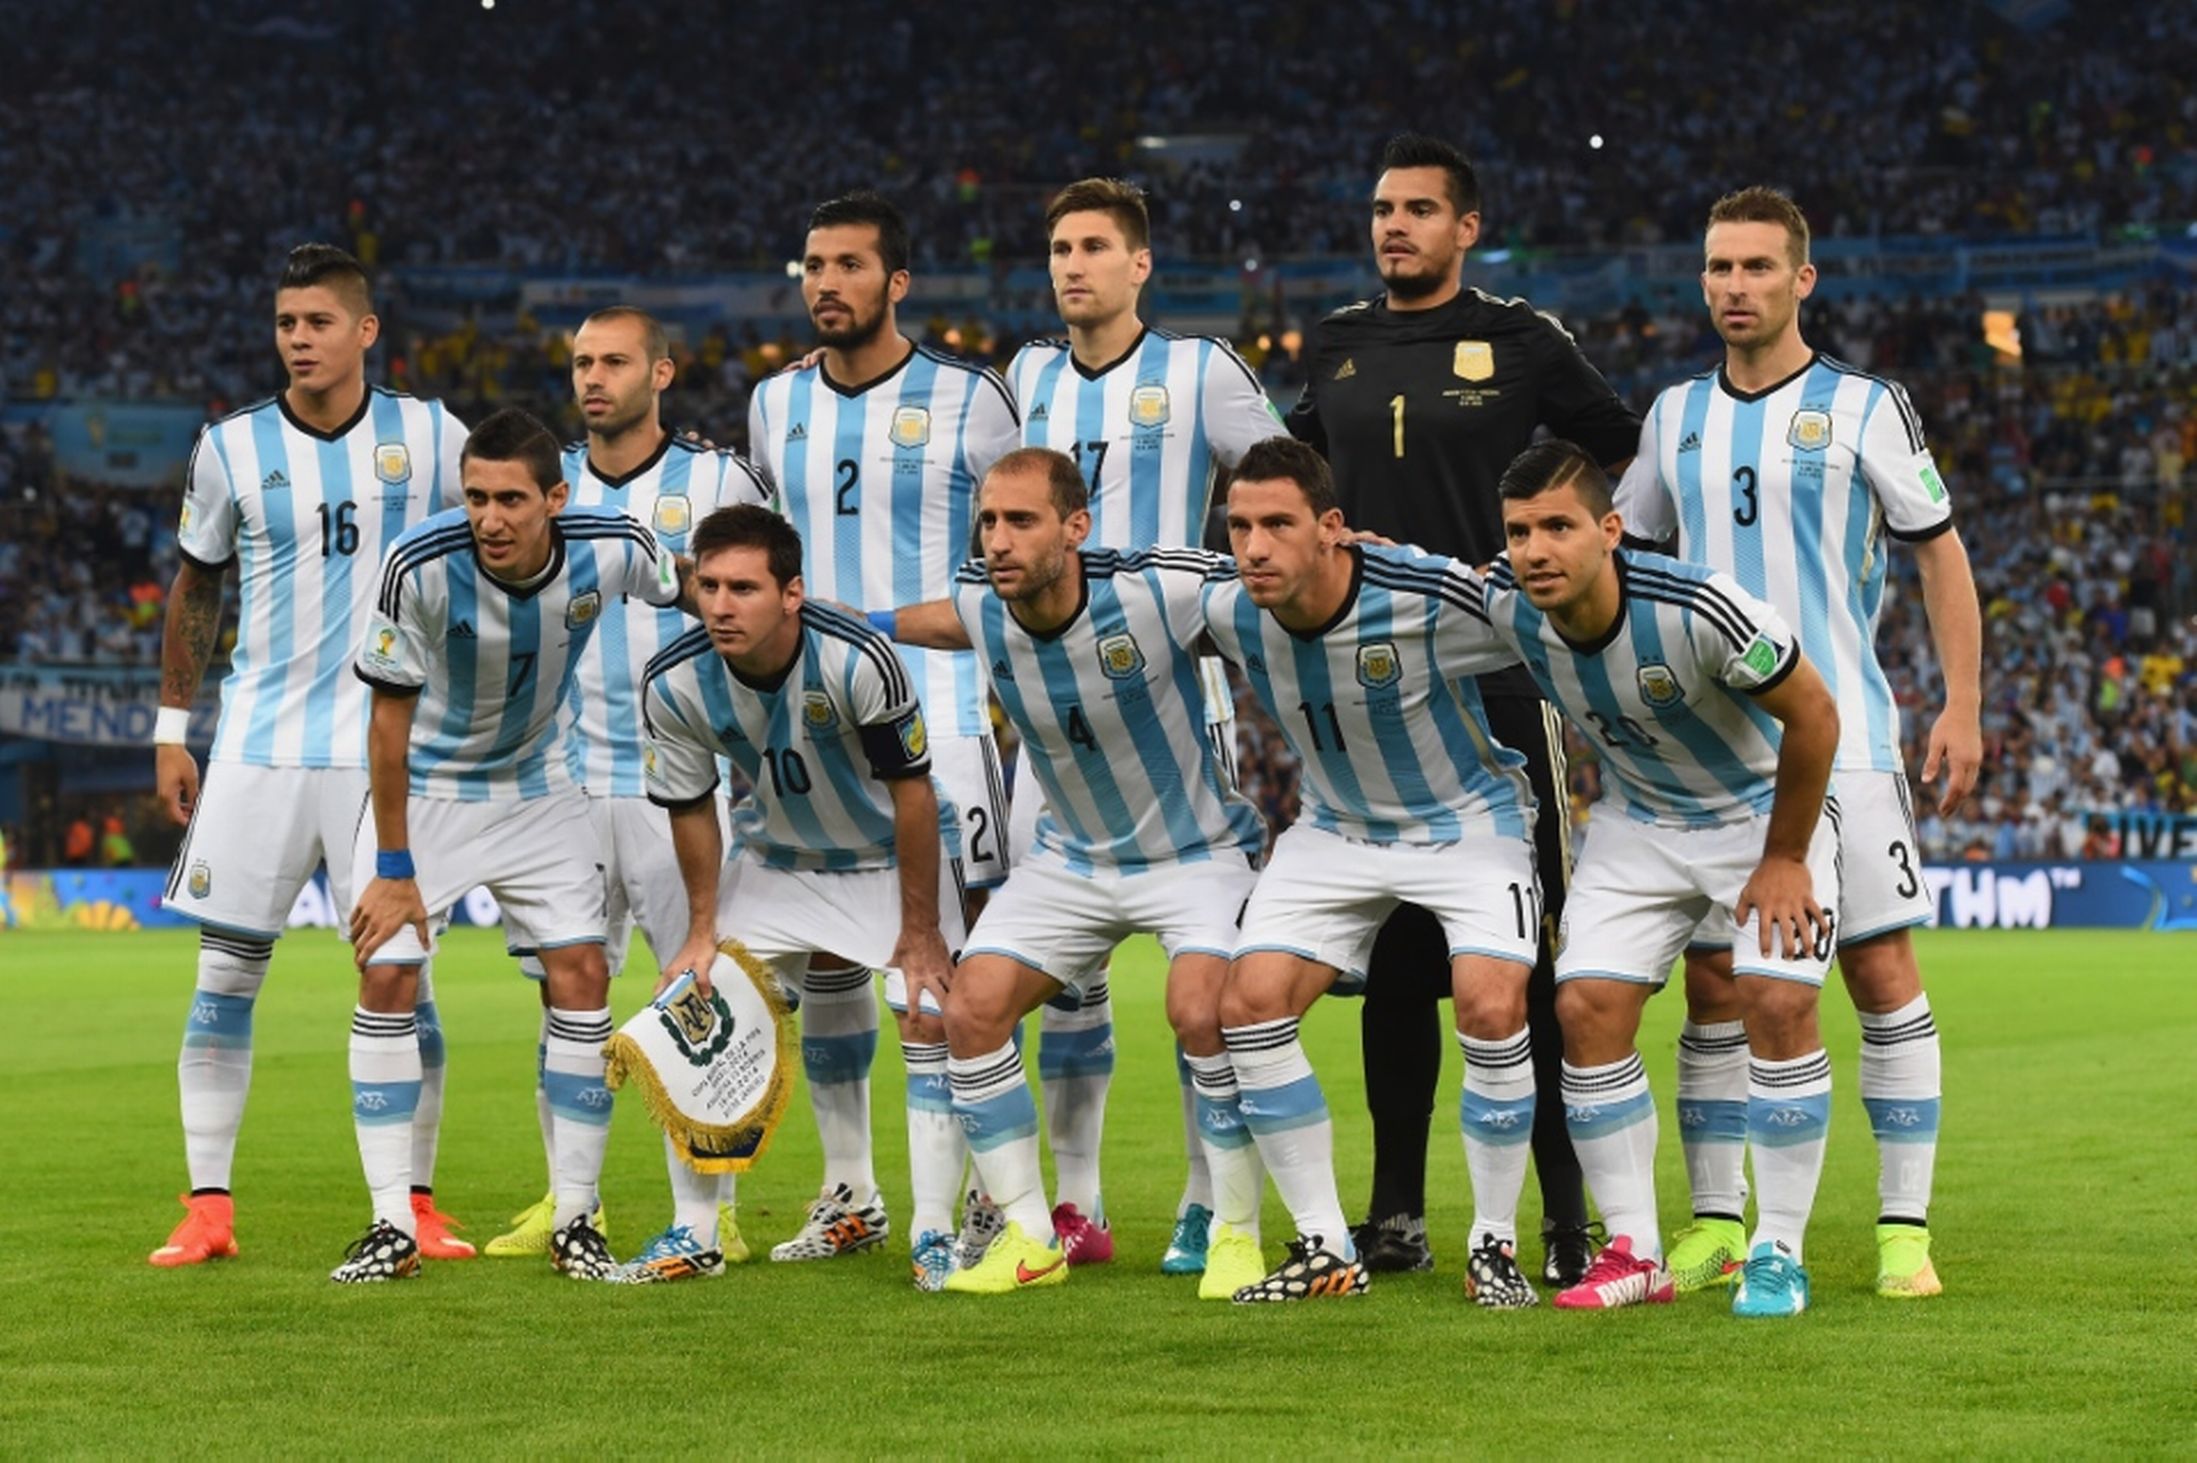 Free download argentina national football team wallpaper x stmednet x for your desktop mobile tablet explore argentina national football team wallpapers egypt national football team